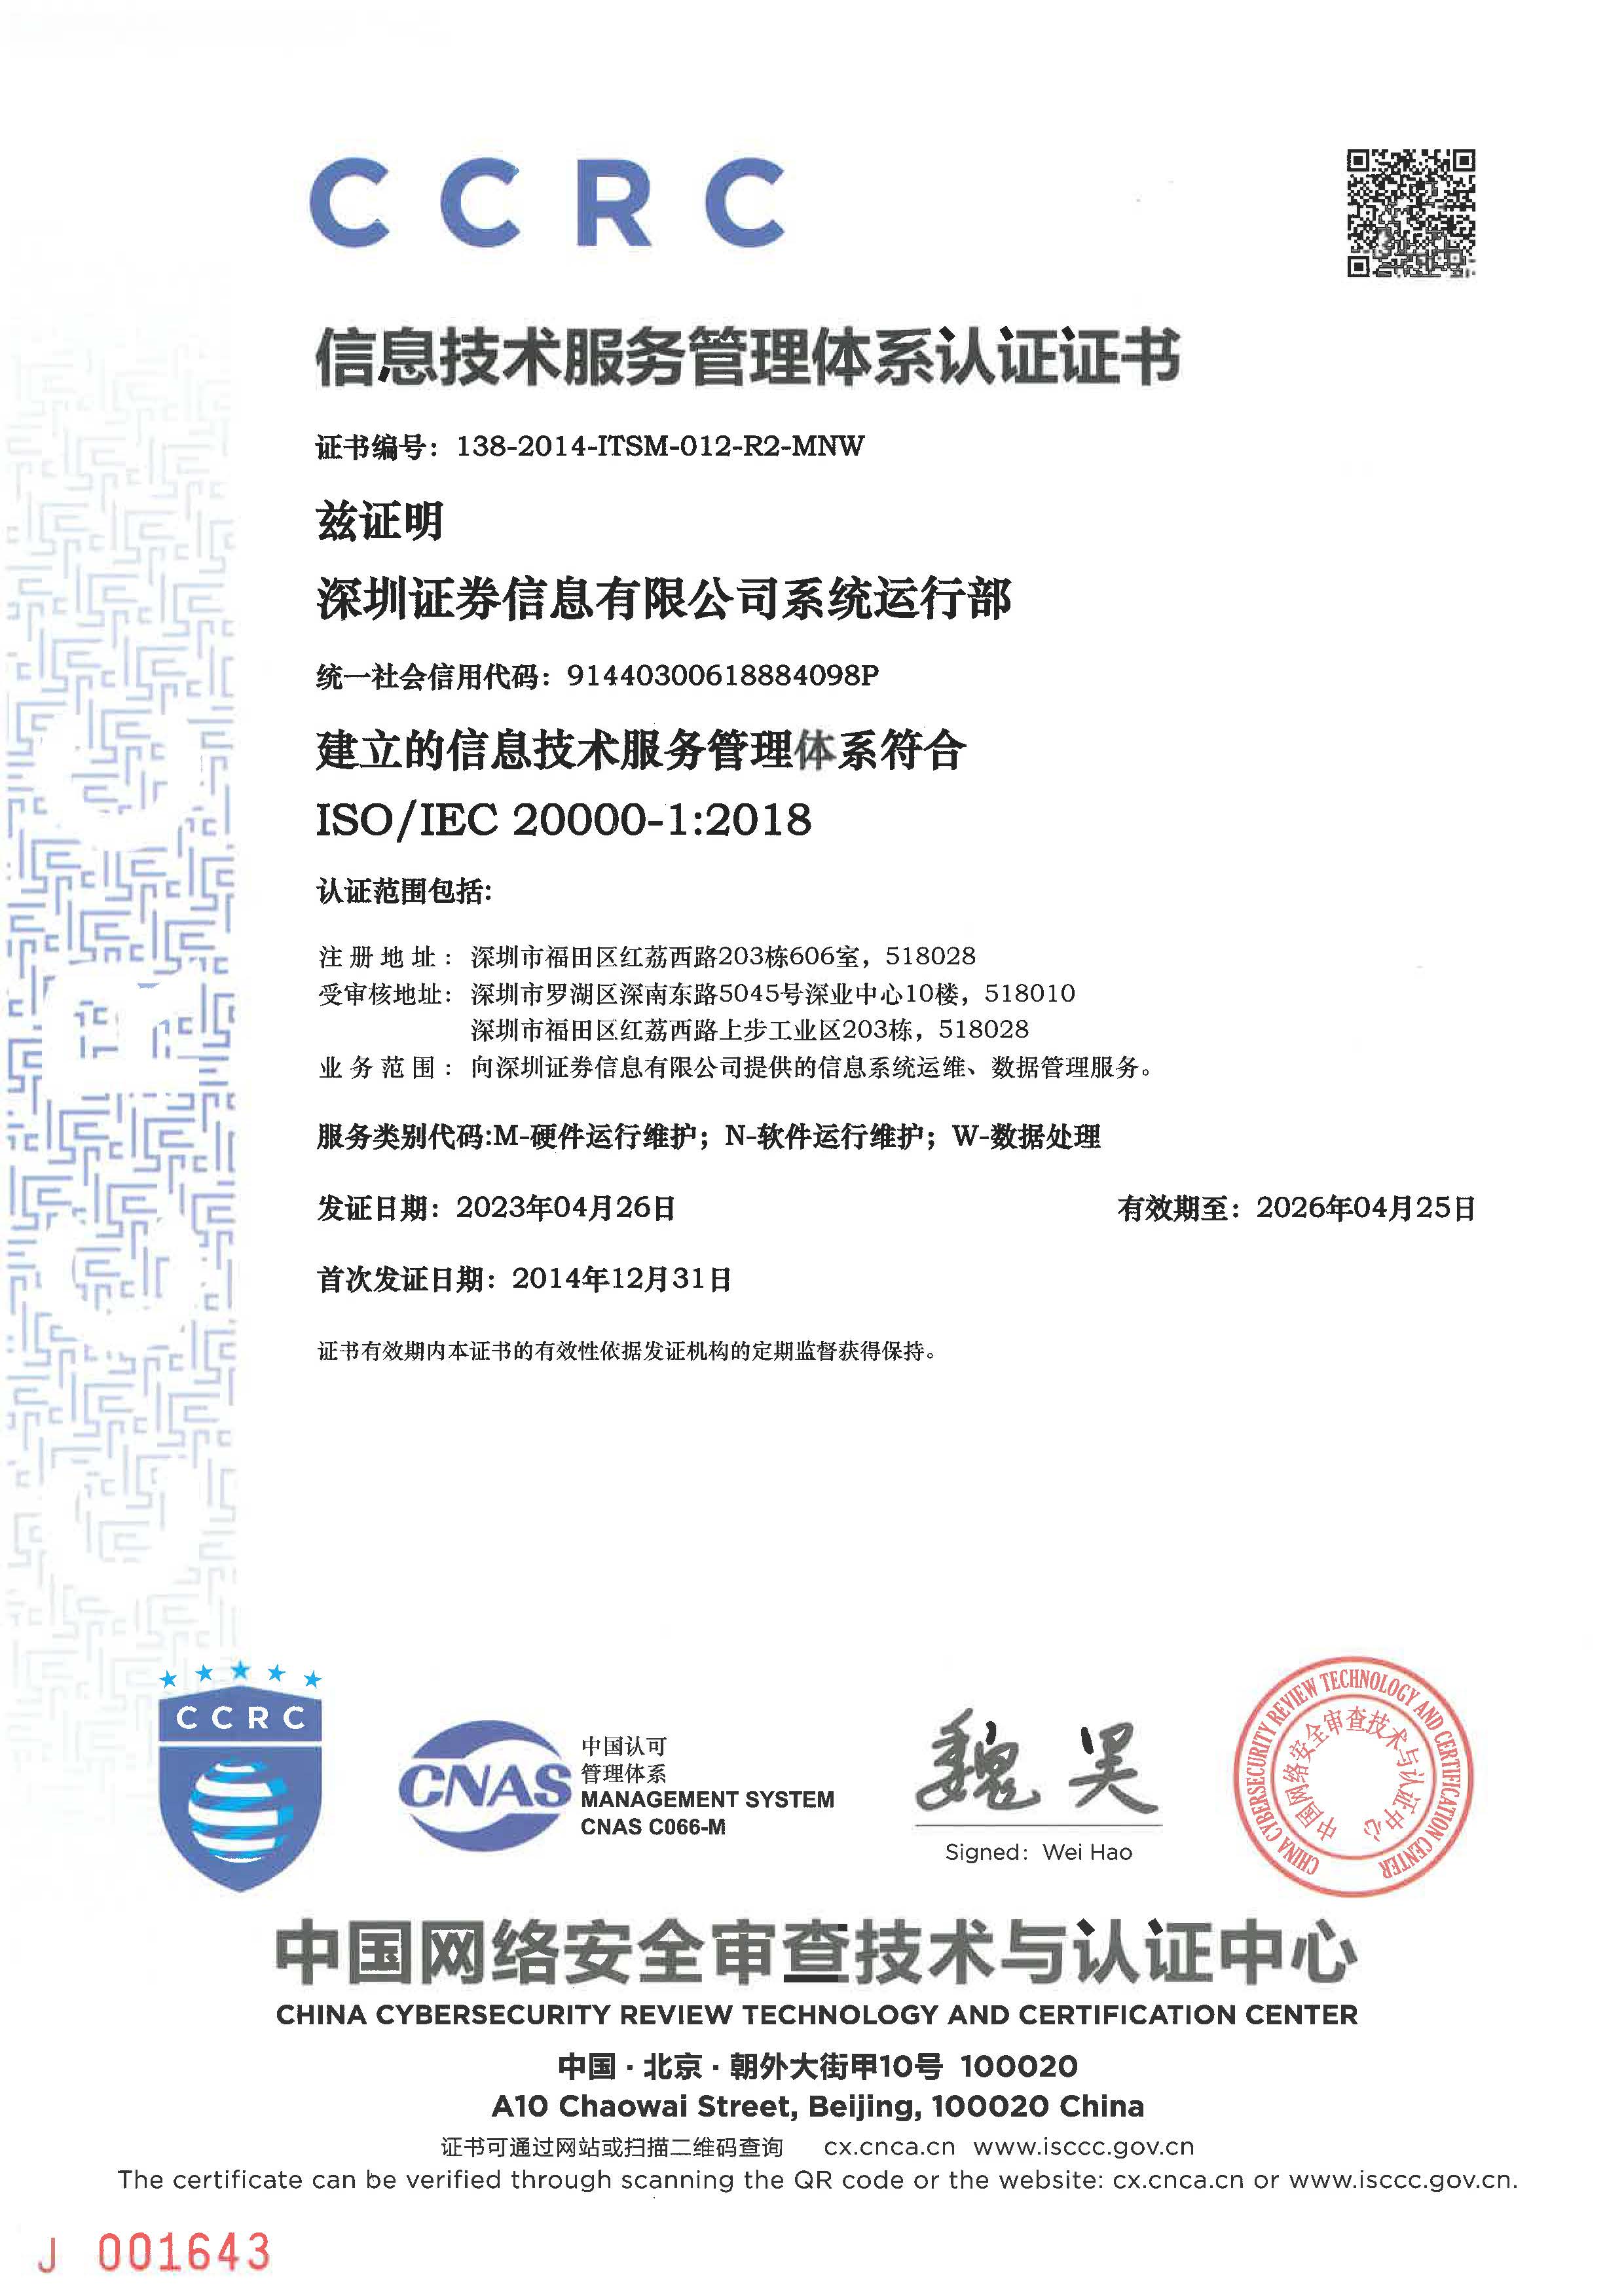 ISCCC安全管理体系认证证书-信息公司系统部.jpg